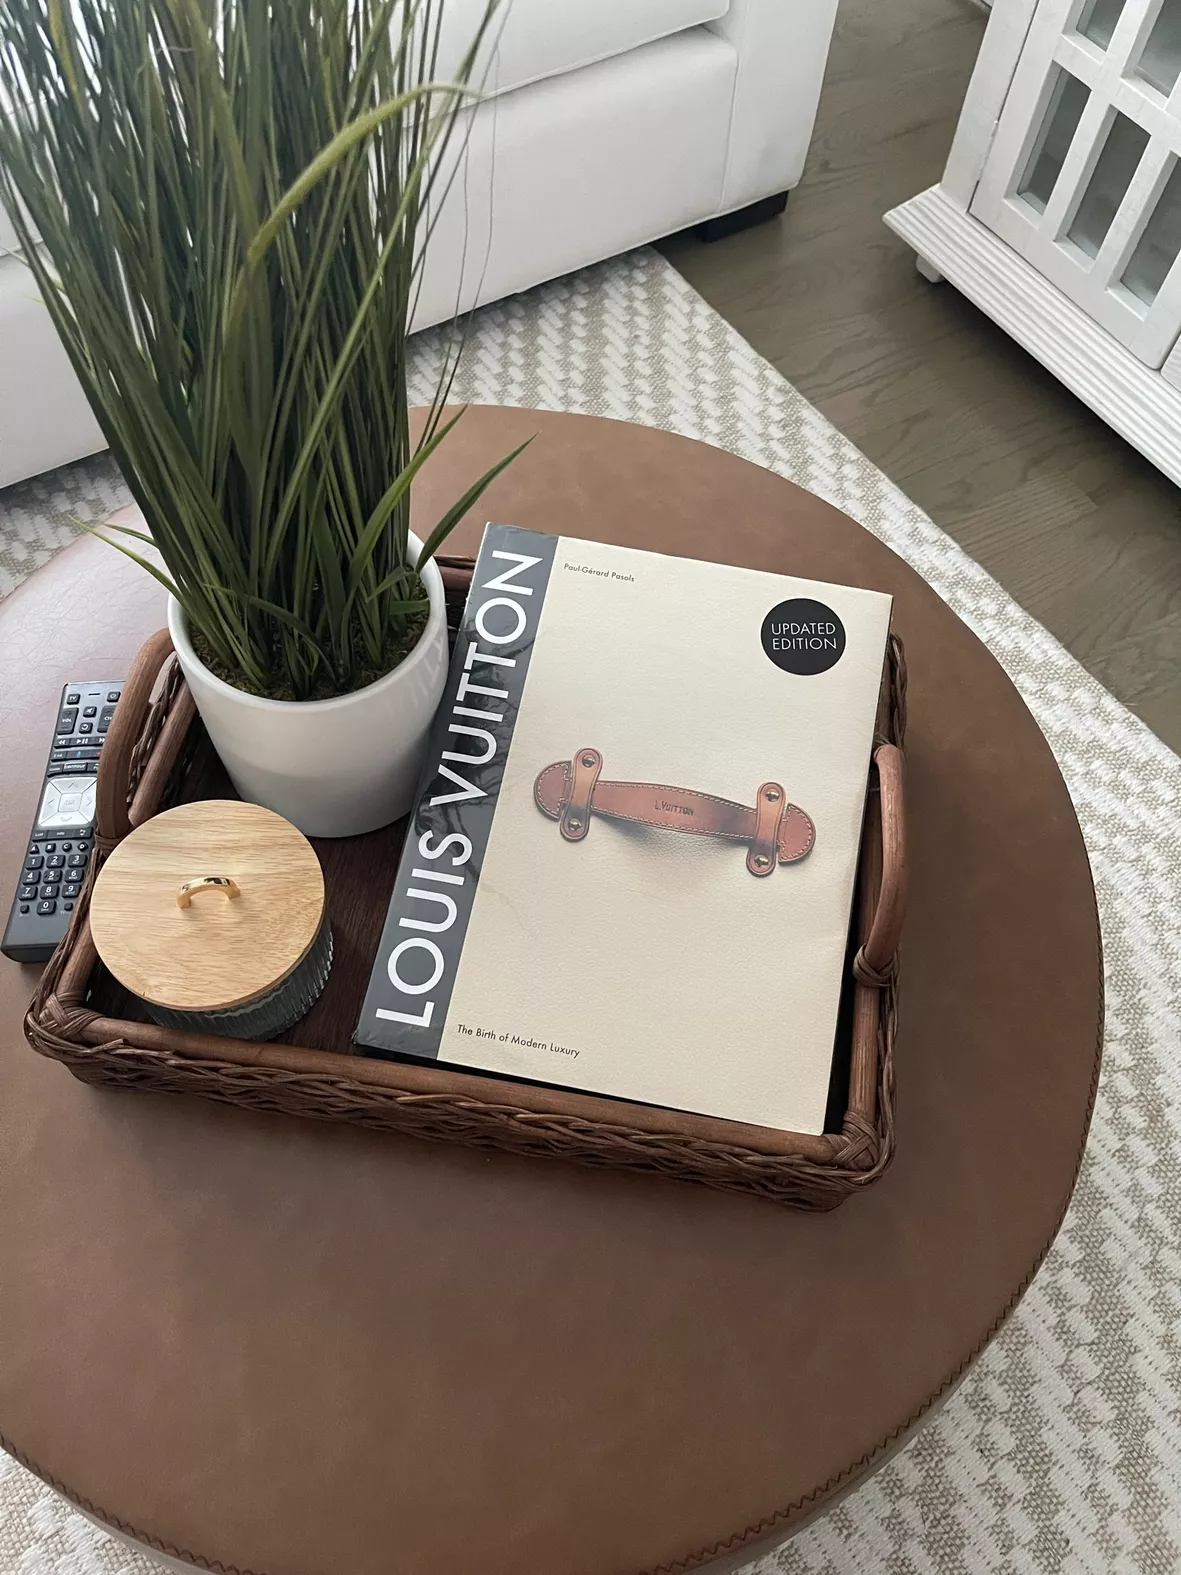 Louis Vuitton: The Birth of Modern Luxury [Book]